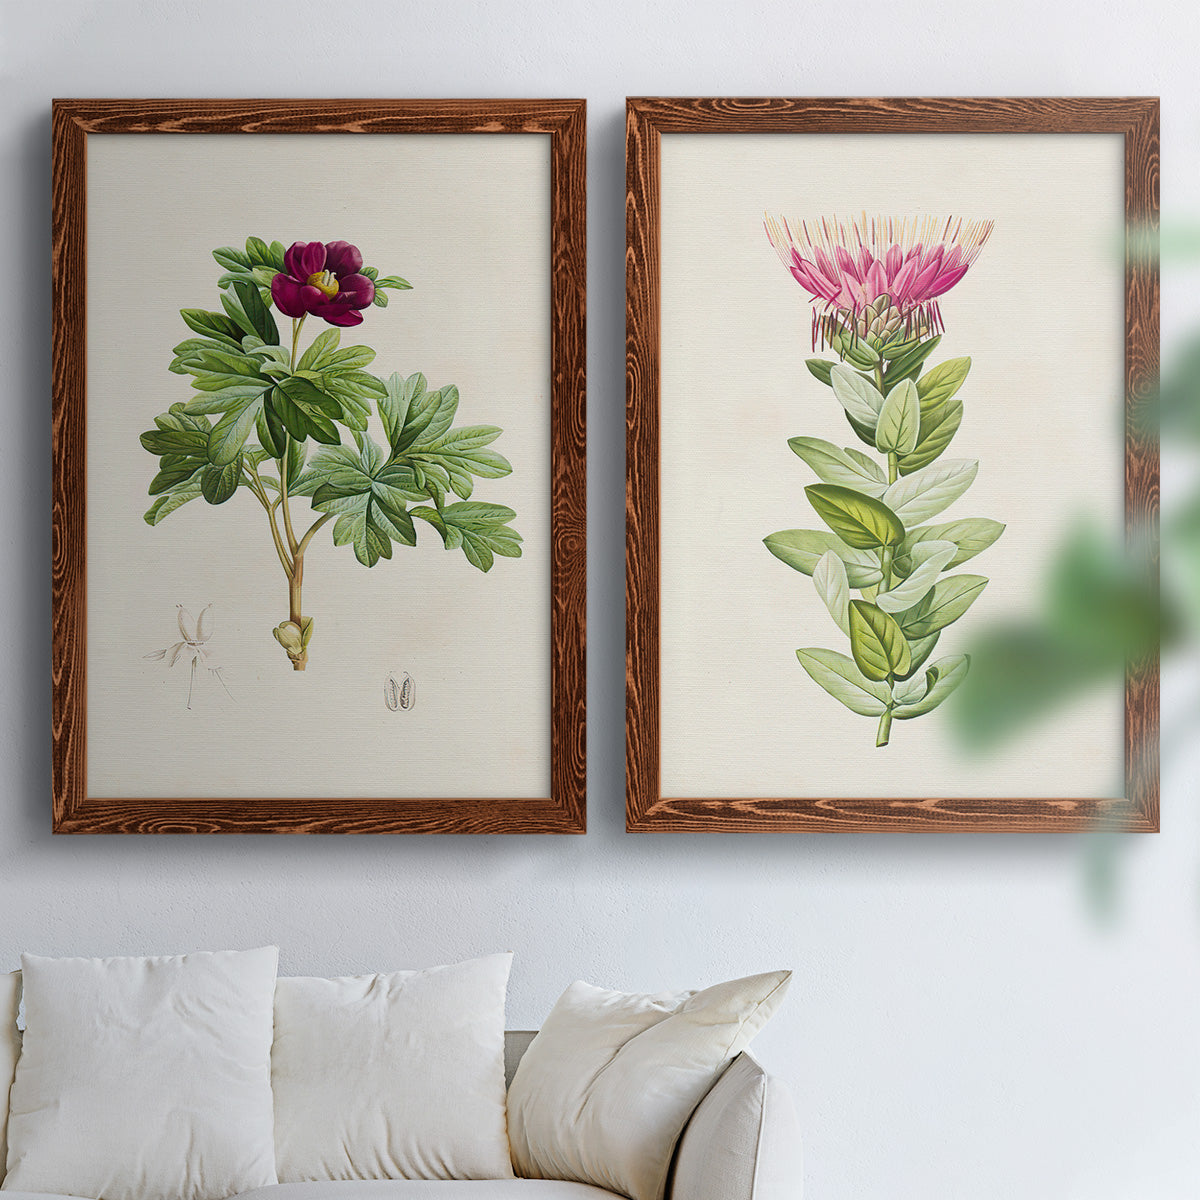 Pretty Pink Botanicals III - Premium Framed Canvas 2 Piece Set - Ready to Hang